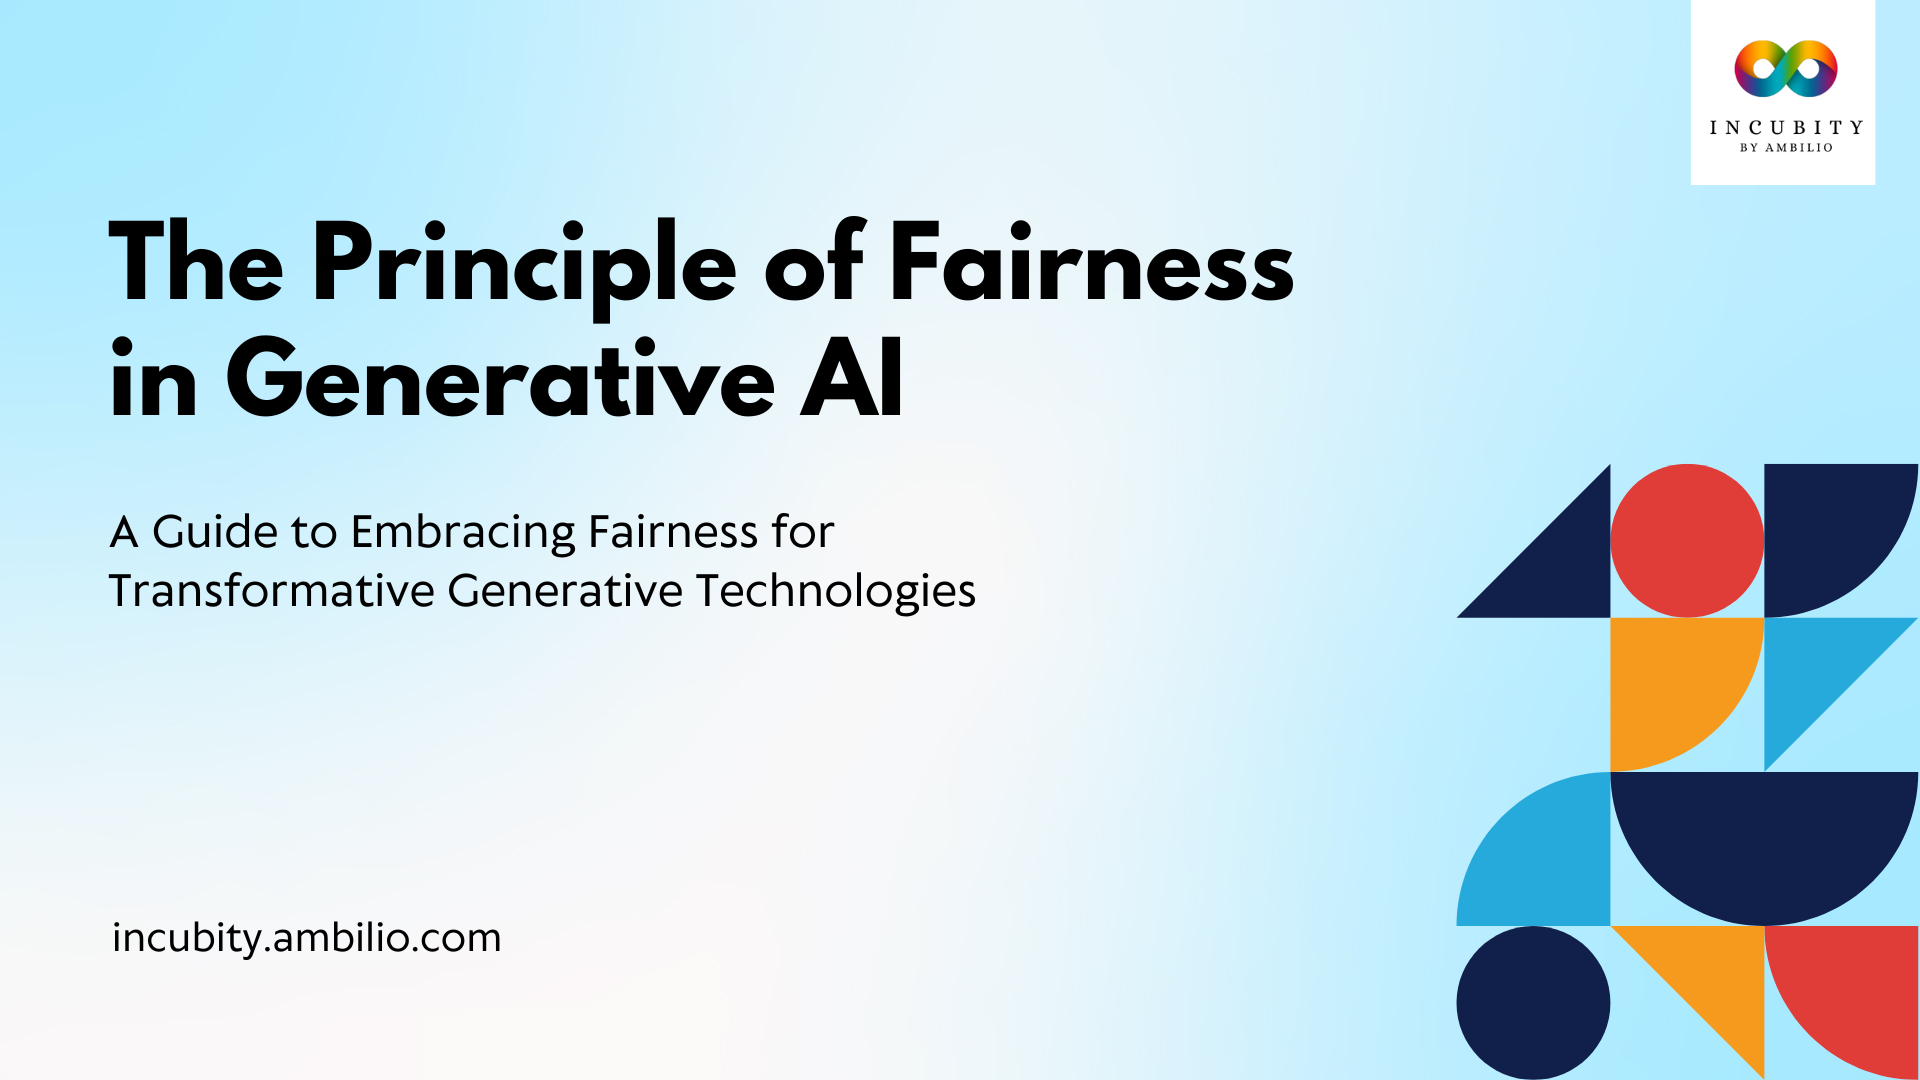 The Principle of Fairness in Generative AI